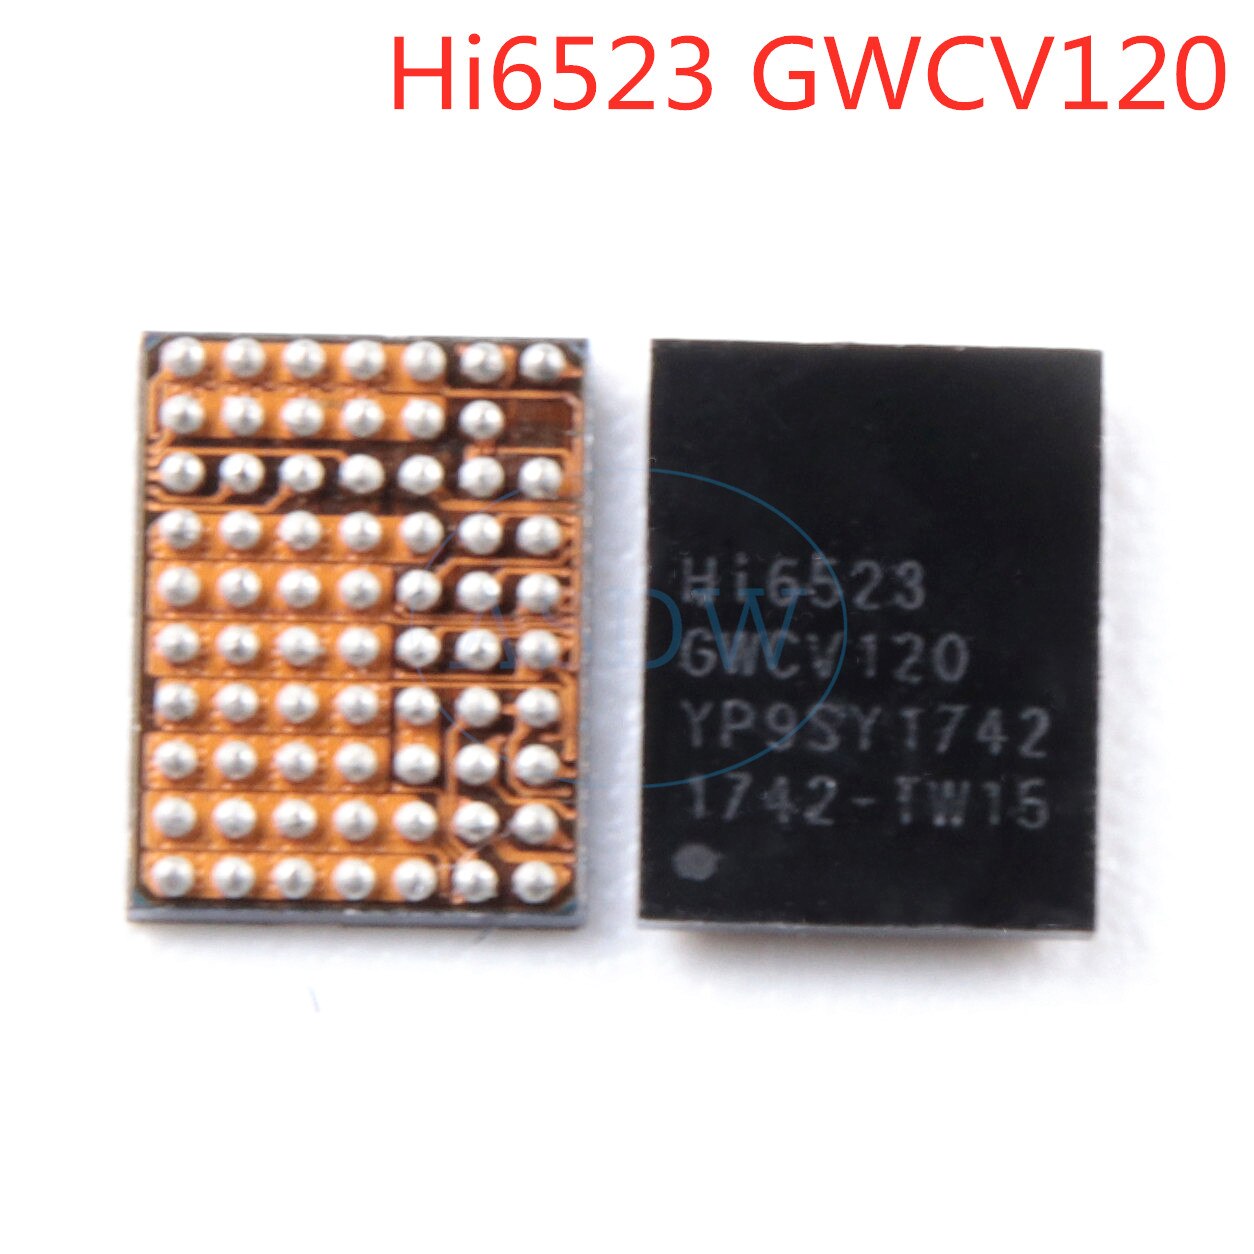 2 Stks/partij 100% Hi6523 Voor Huawei Glory 5X P9 P10 Voeding Ic HI6523GWC V120